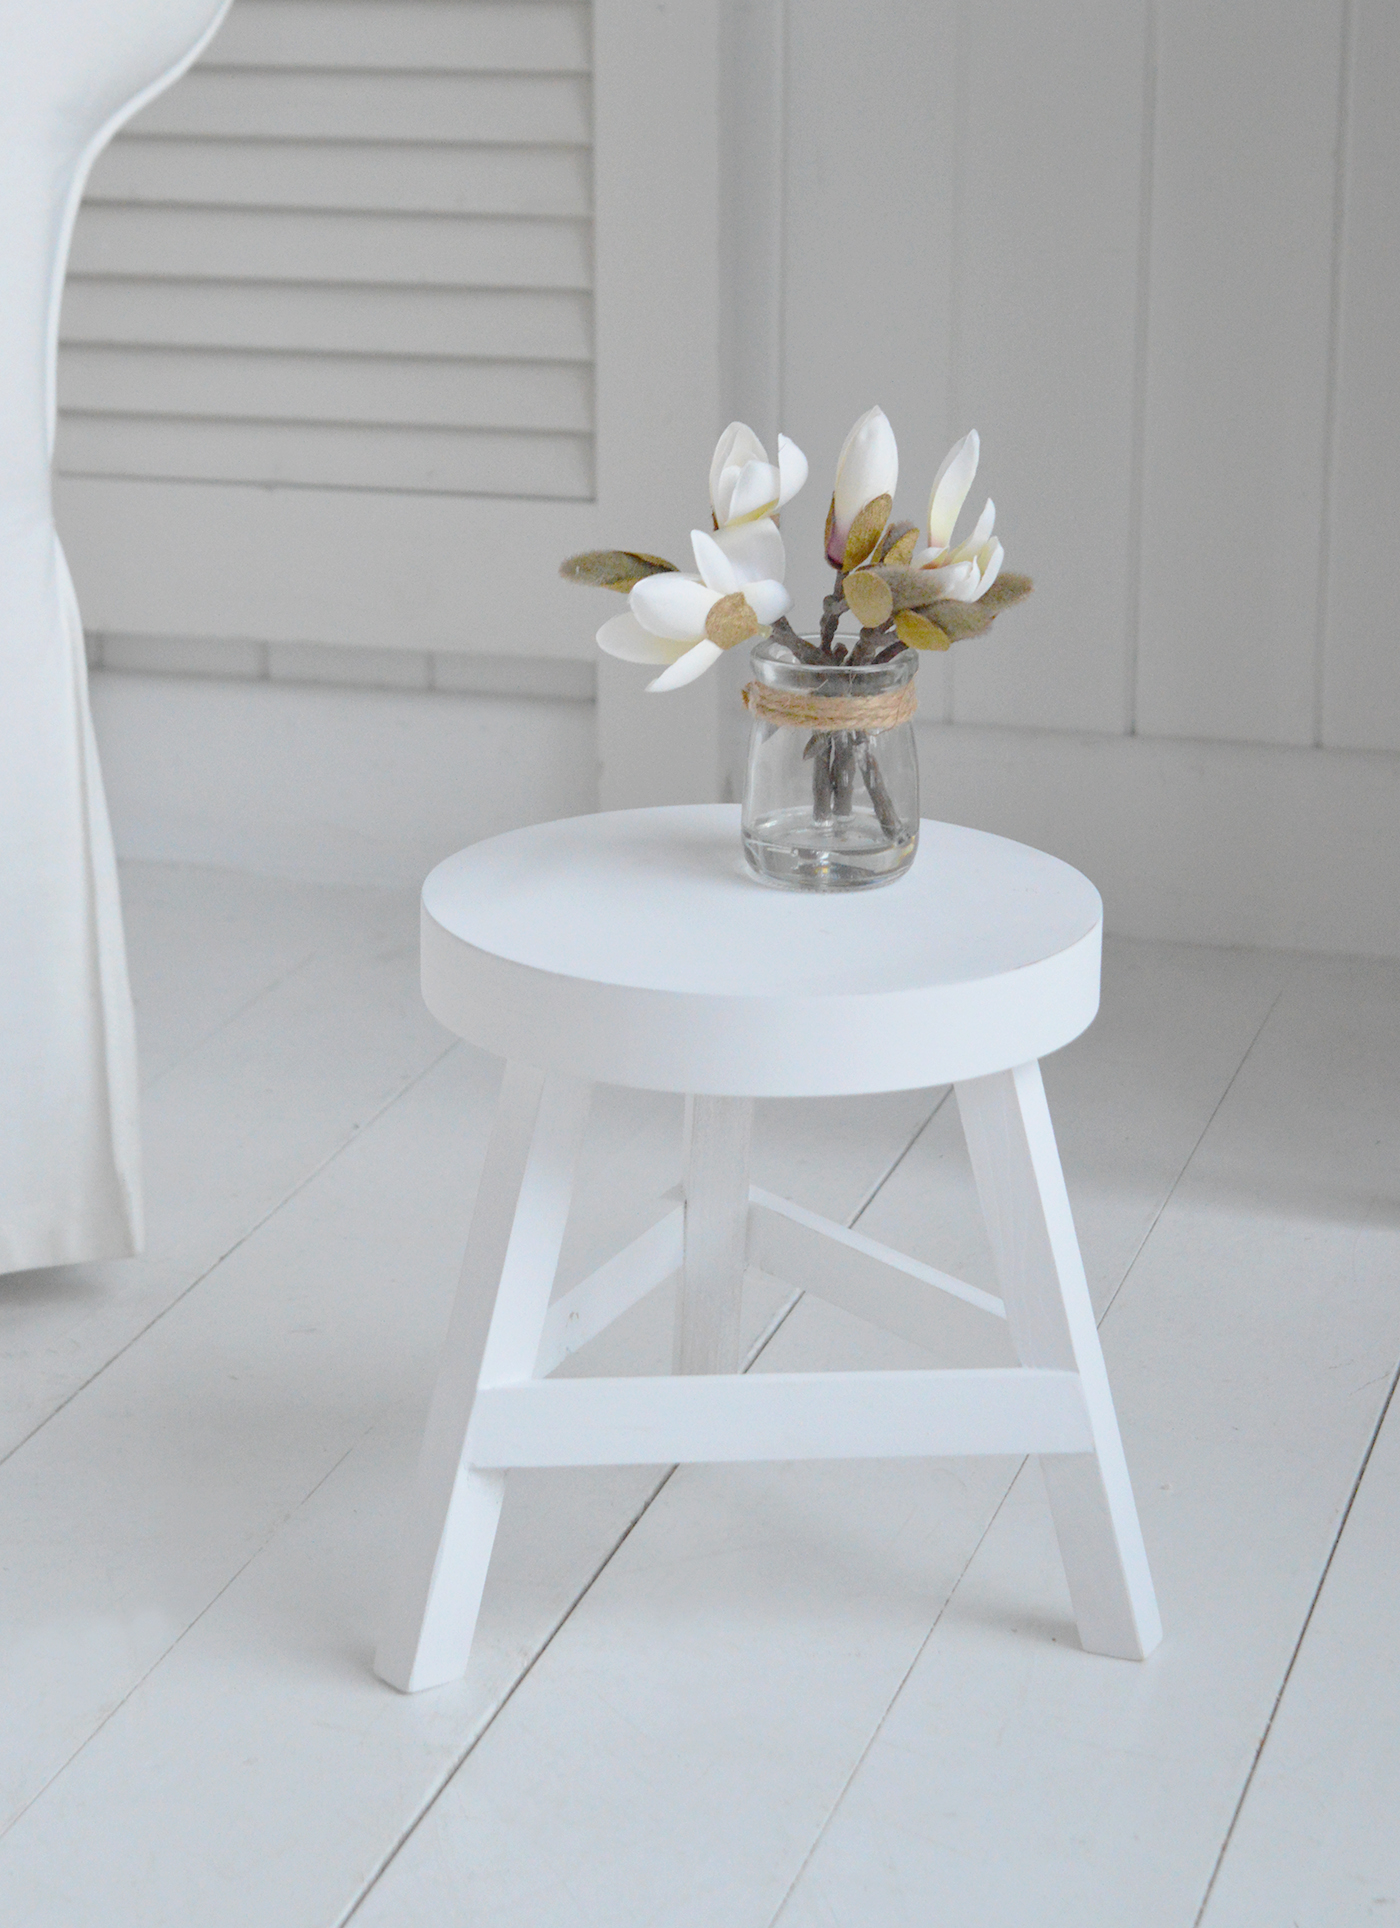 Nantucket round wooden white milking stool - Coastal, Country Furniture